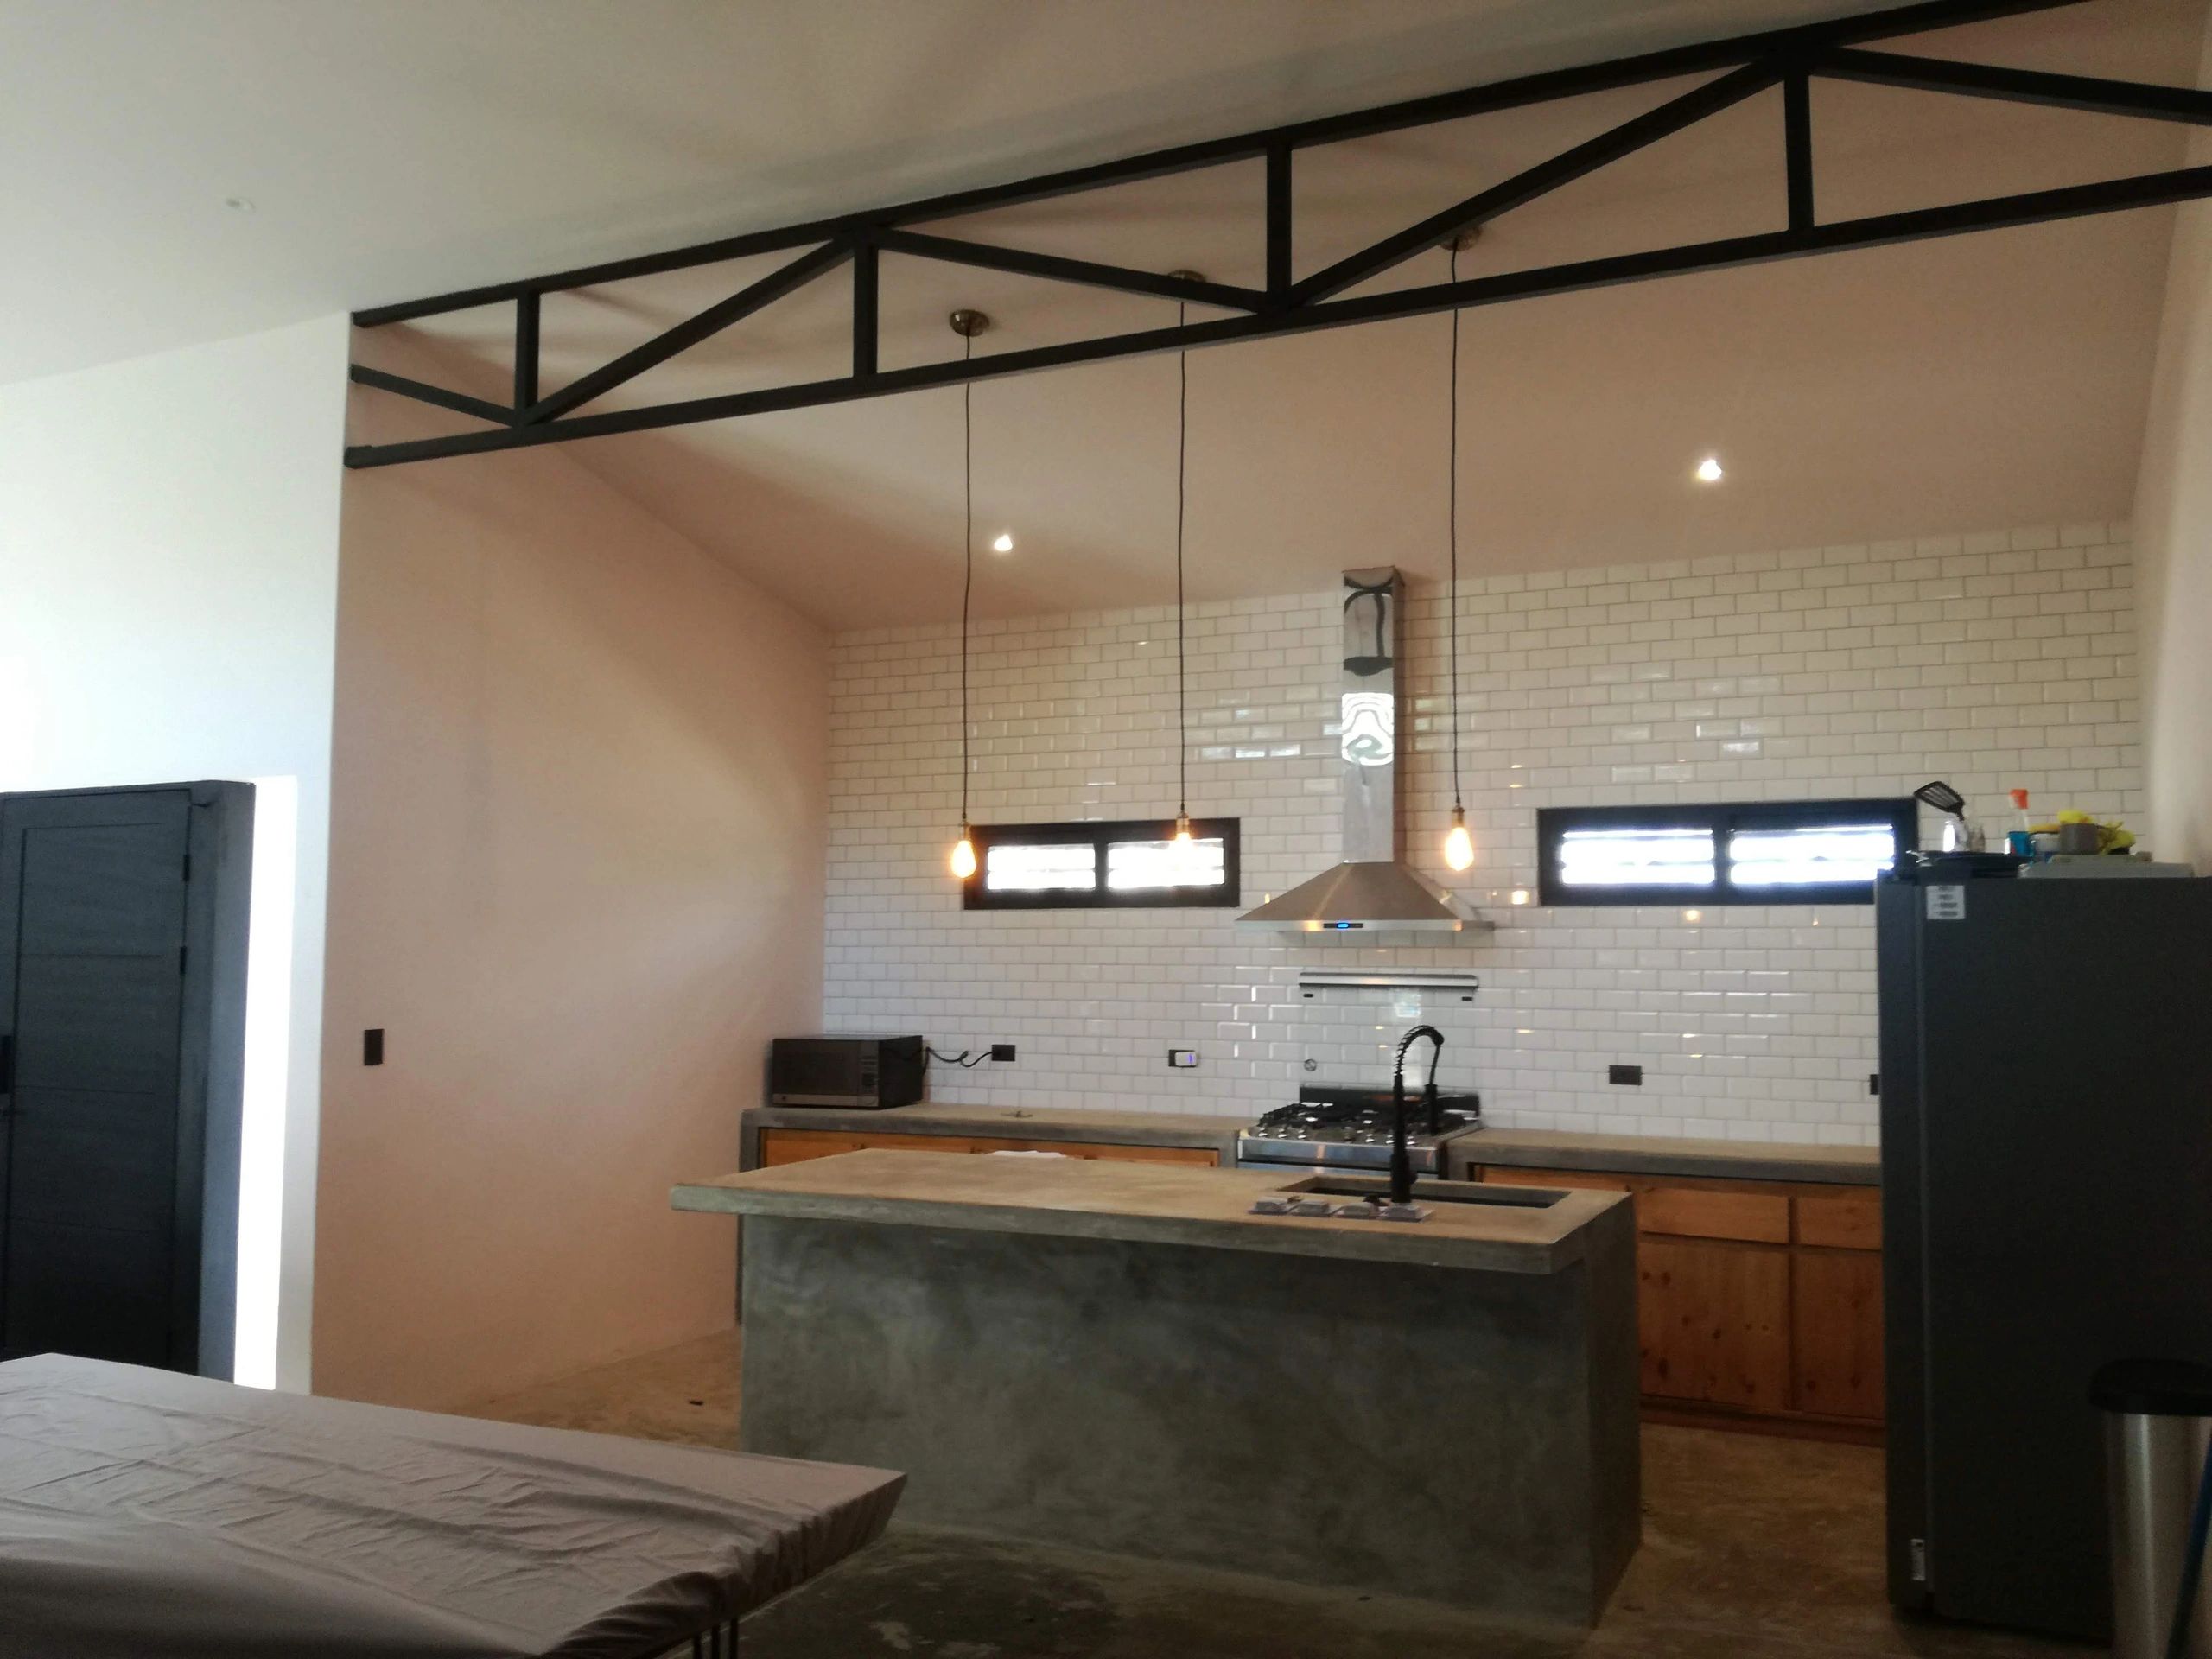 kitchen with granite countertops, subway tiles
Design Permitting Build Costa Rica